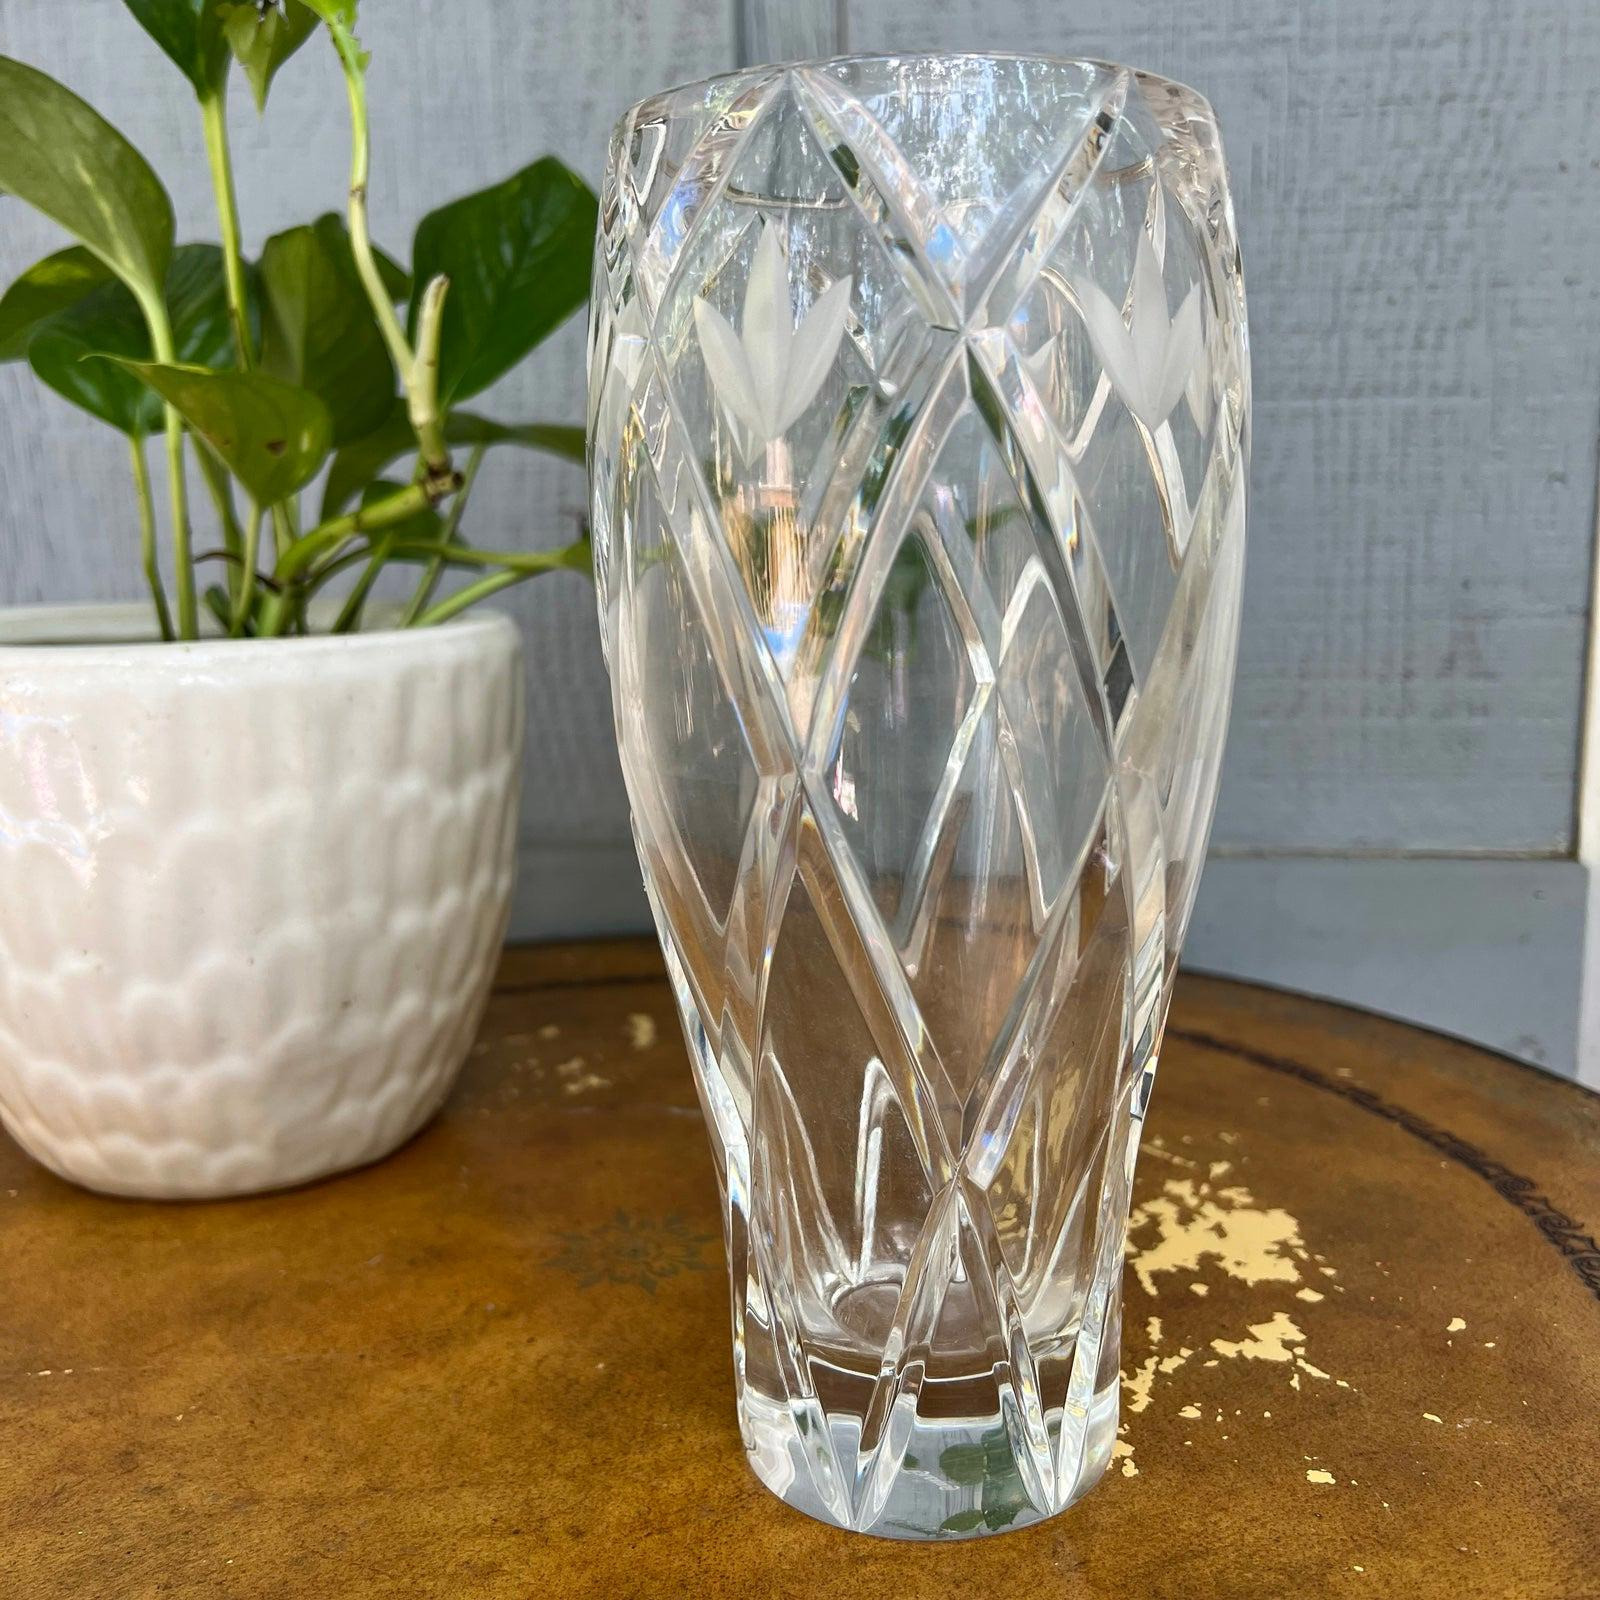 Lenox fine crystal vase with flowers